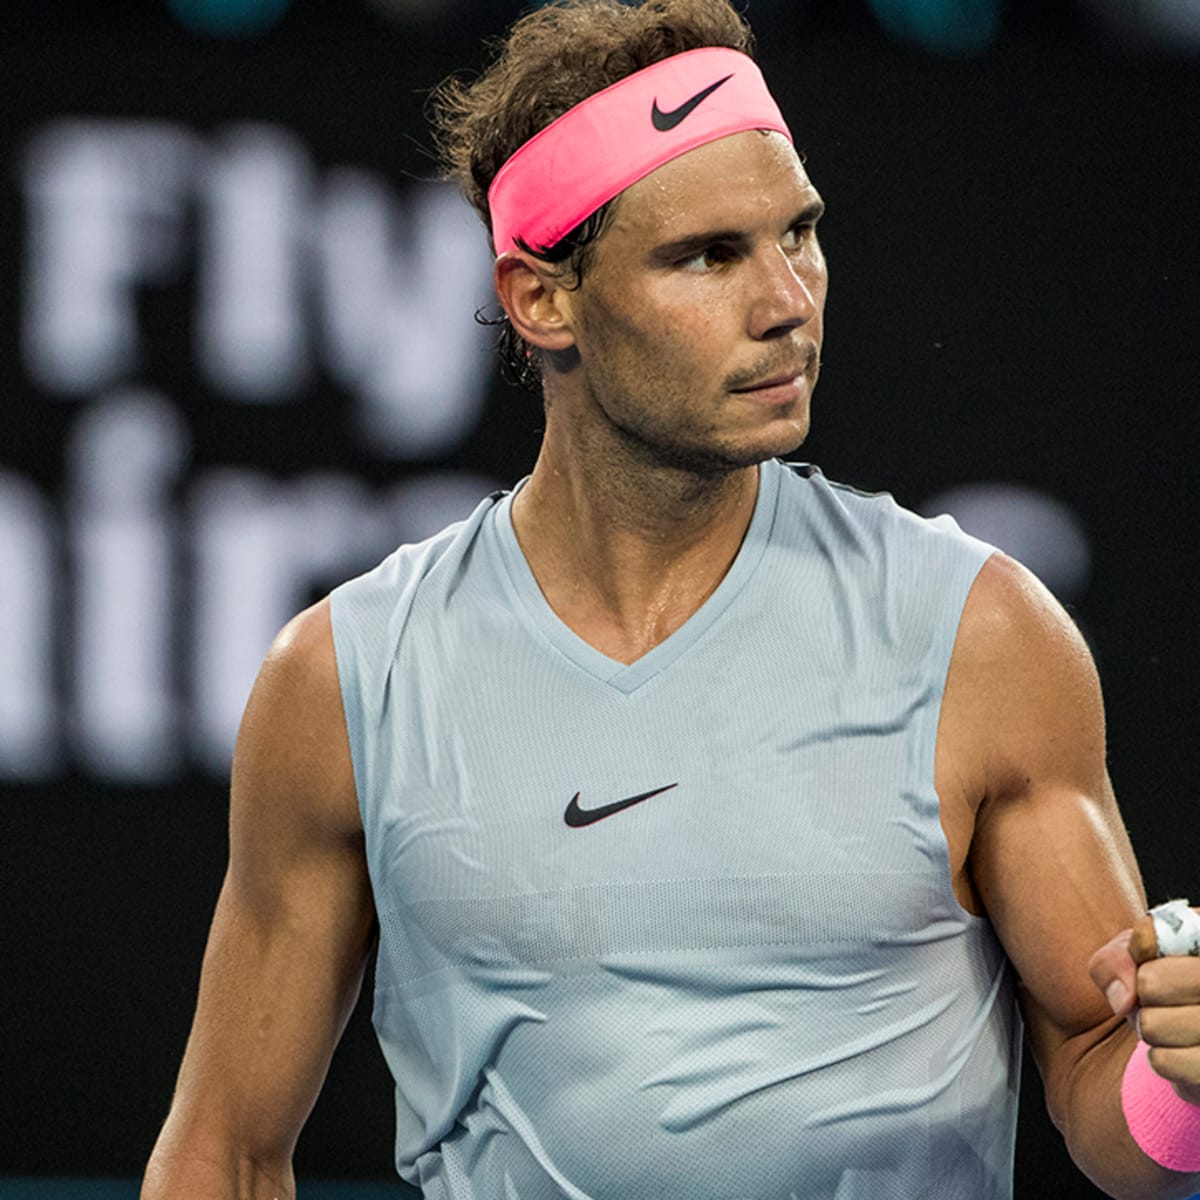 Australian Open 2018: Nadal wins, Americans lose - Illustrated